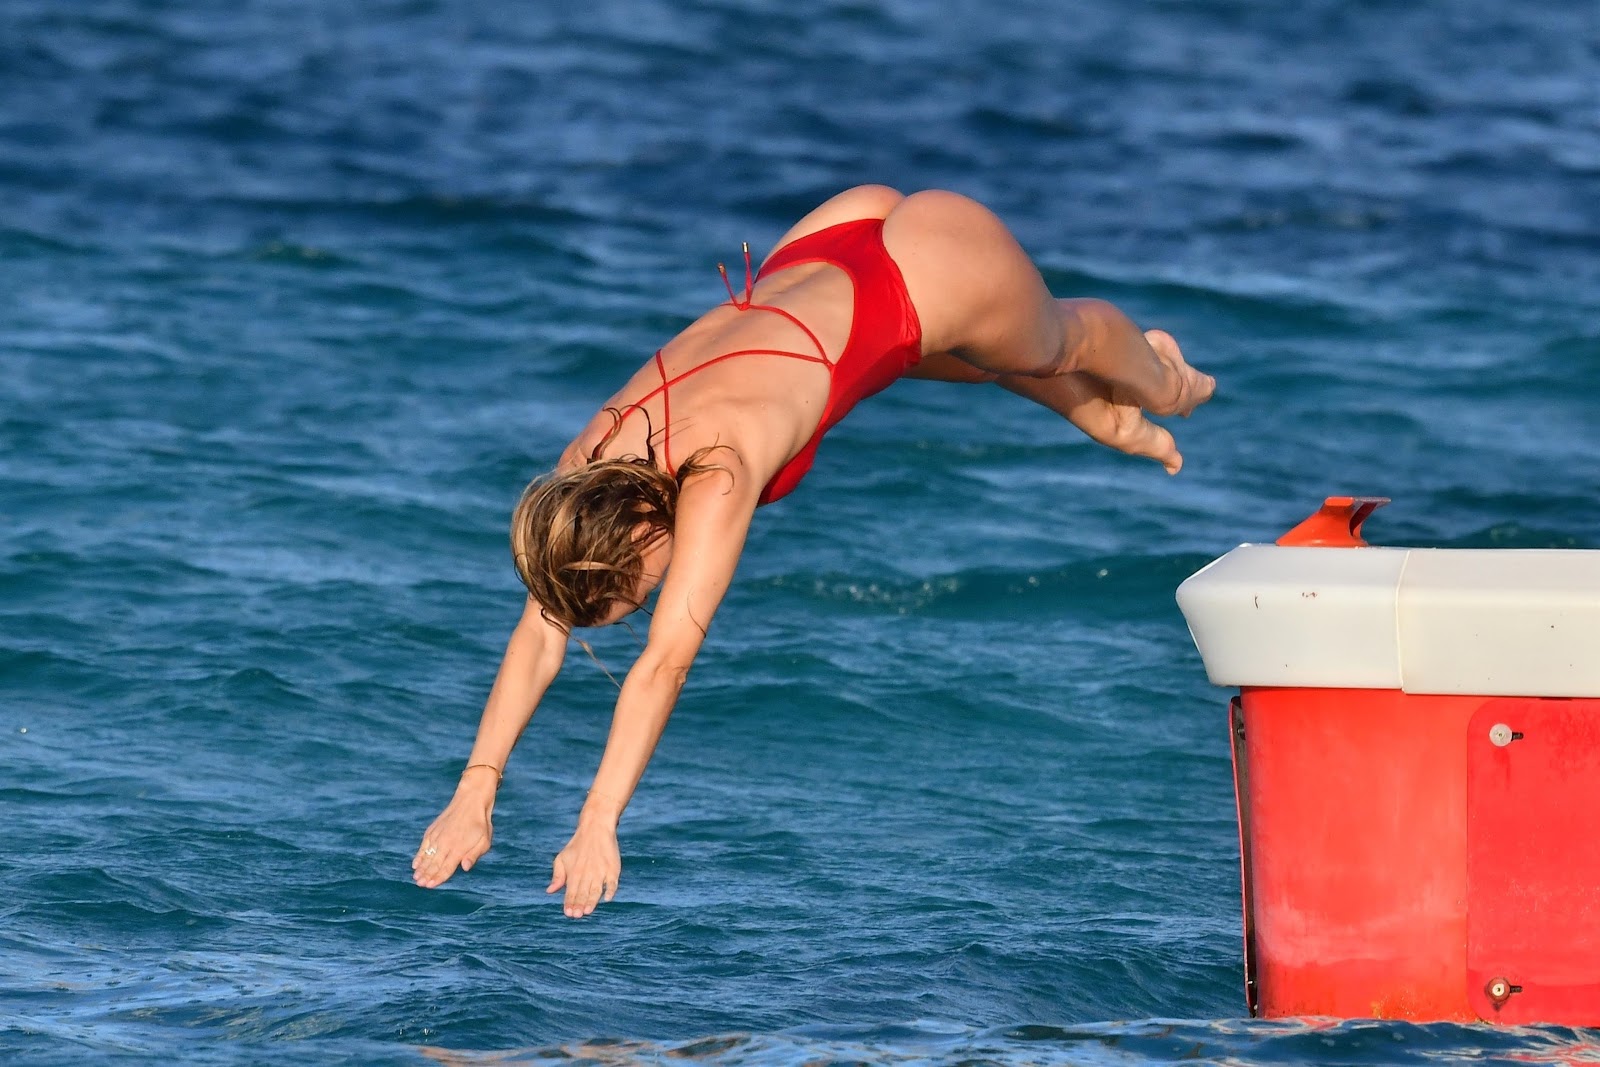 Kimberley Garner showcasing her voluptuous curves in red swimwear on New Year getaway in St. Barts.